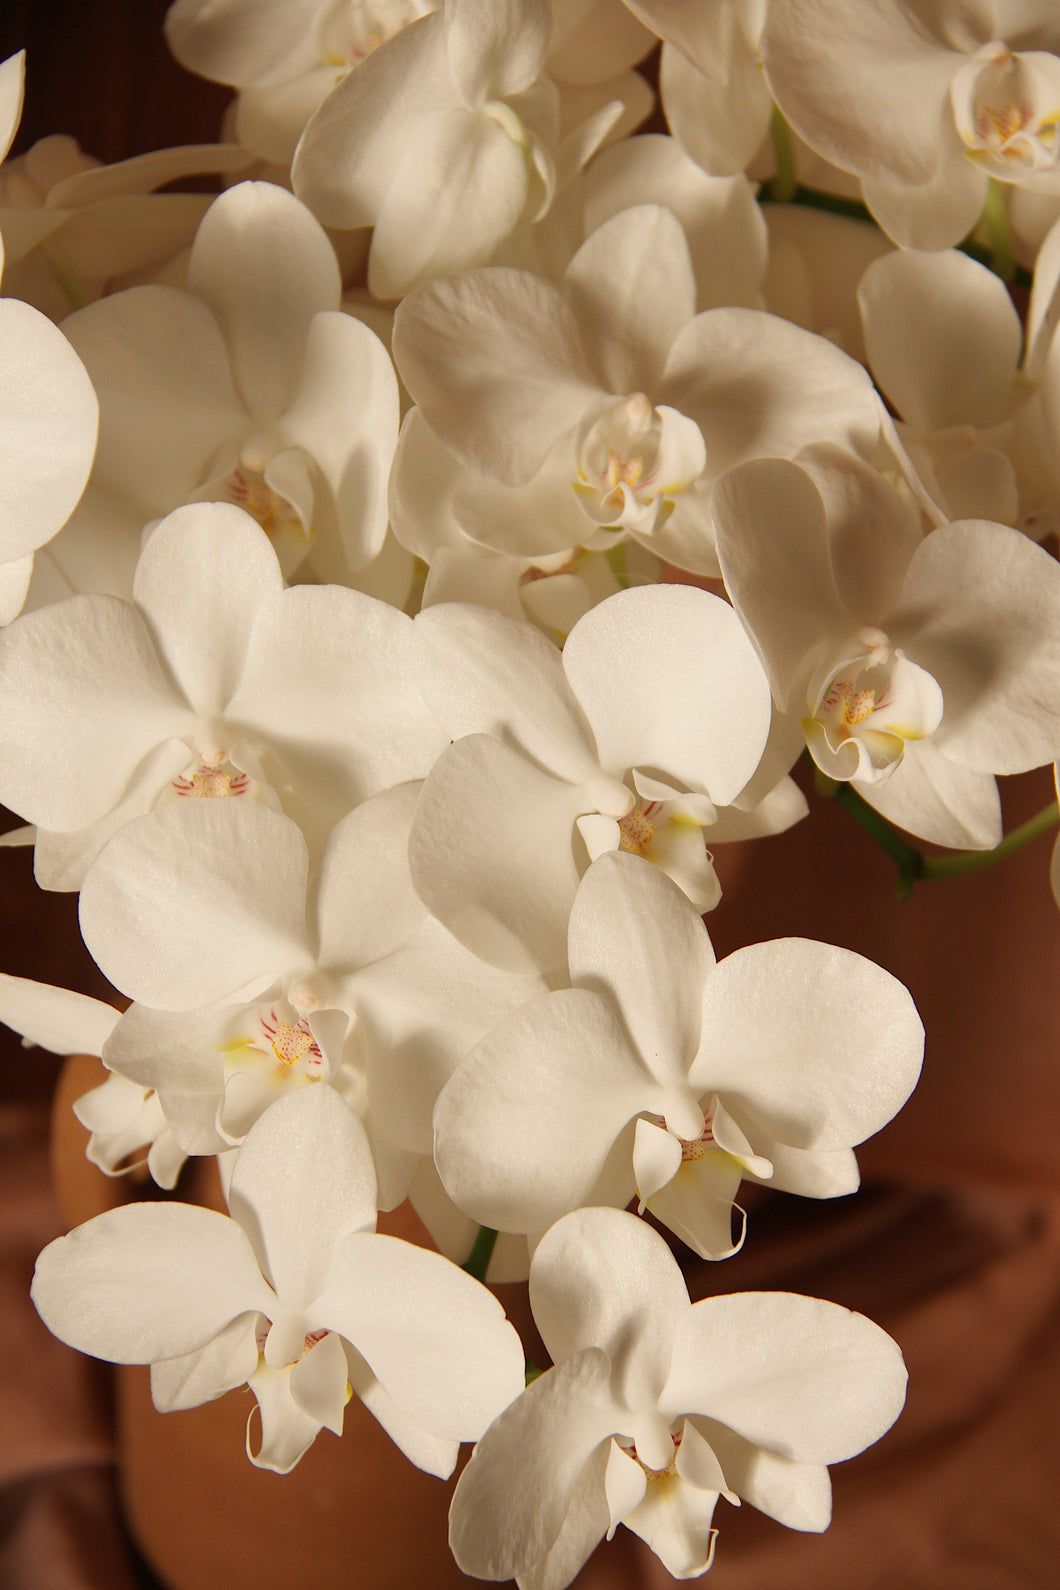 Mini white orchid stem